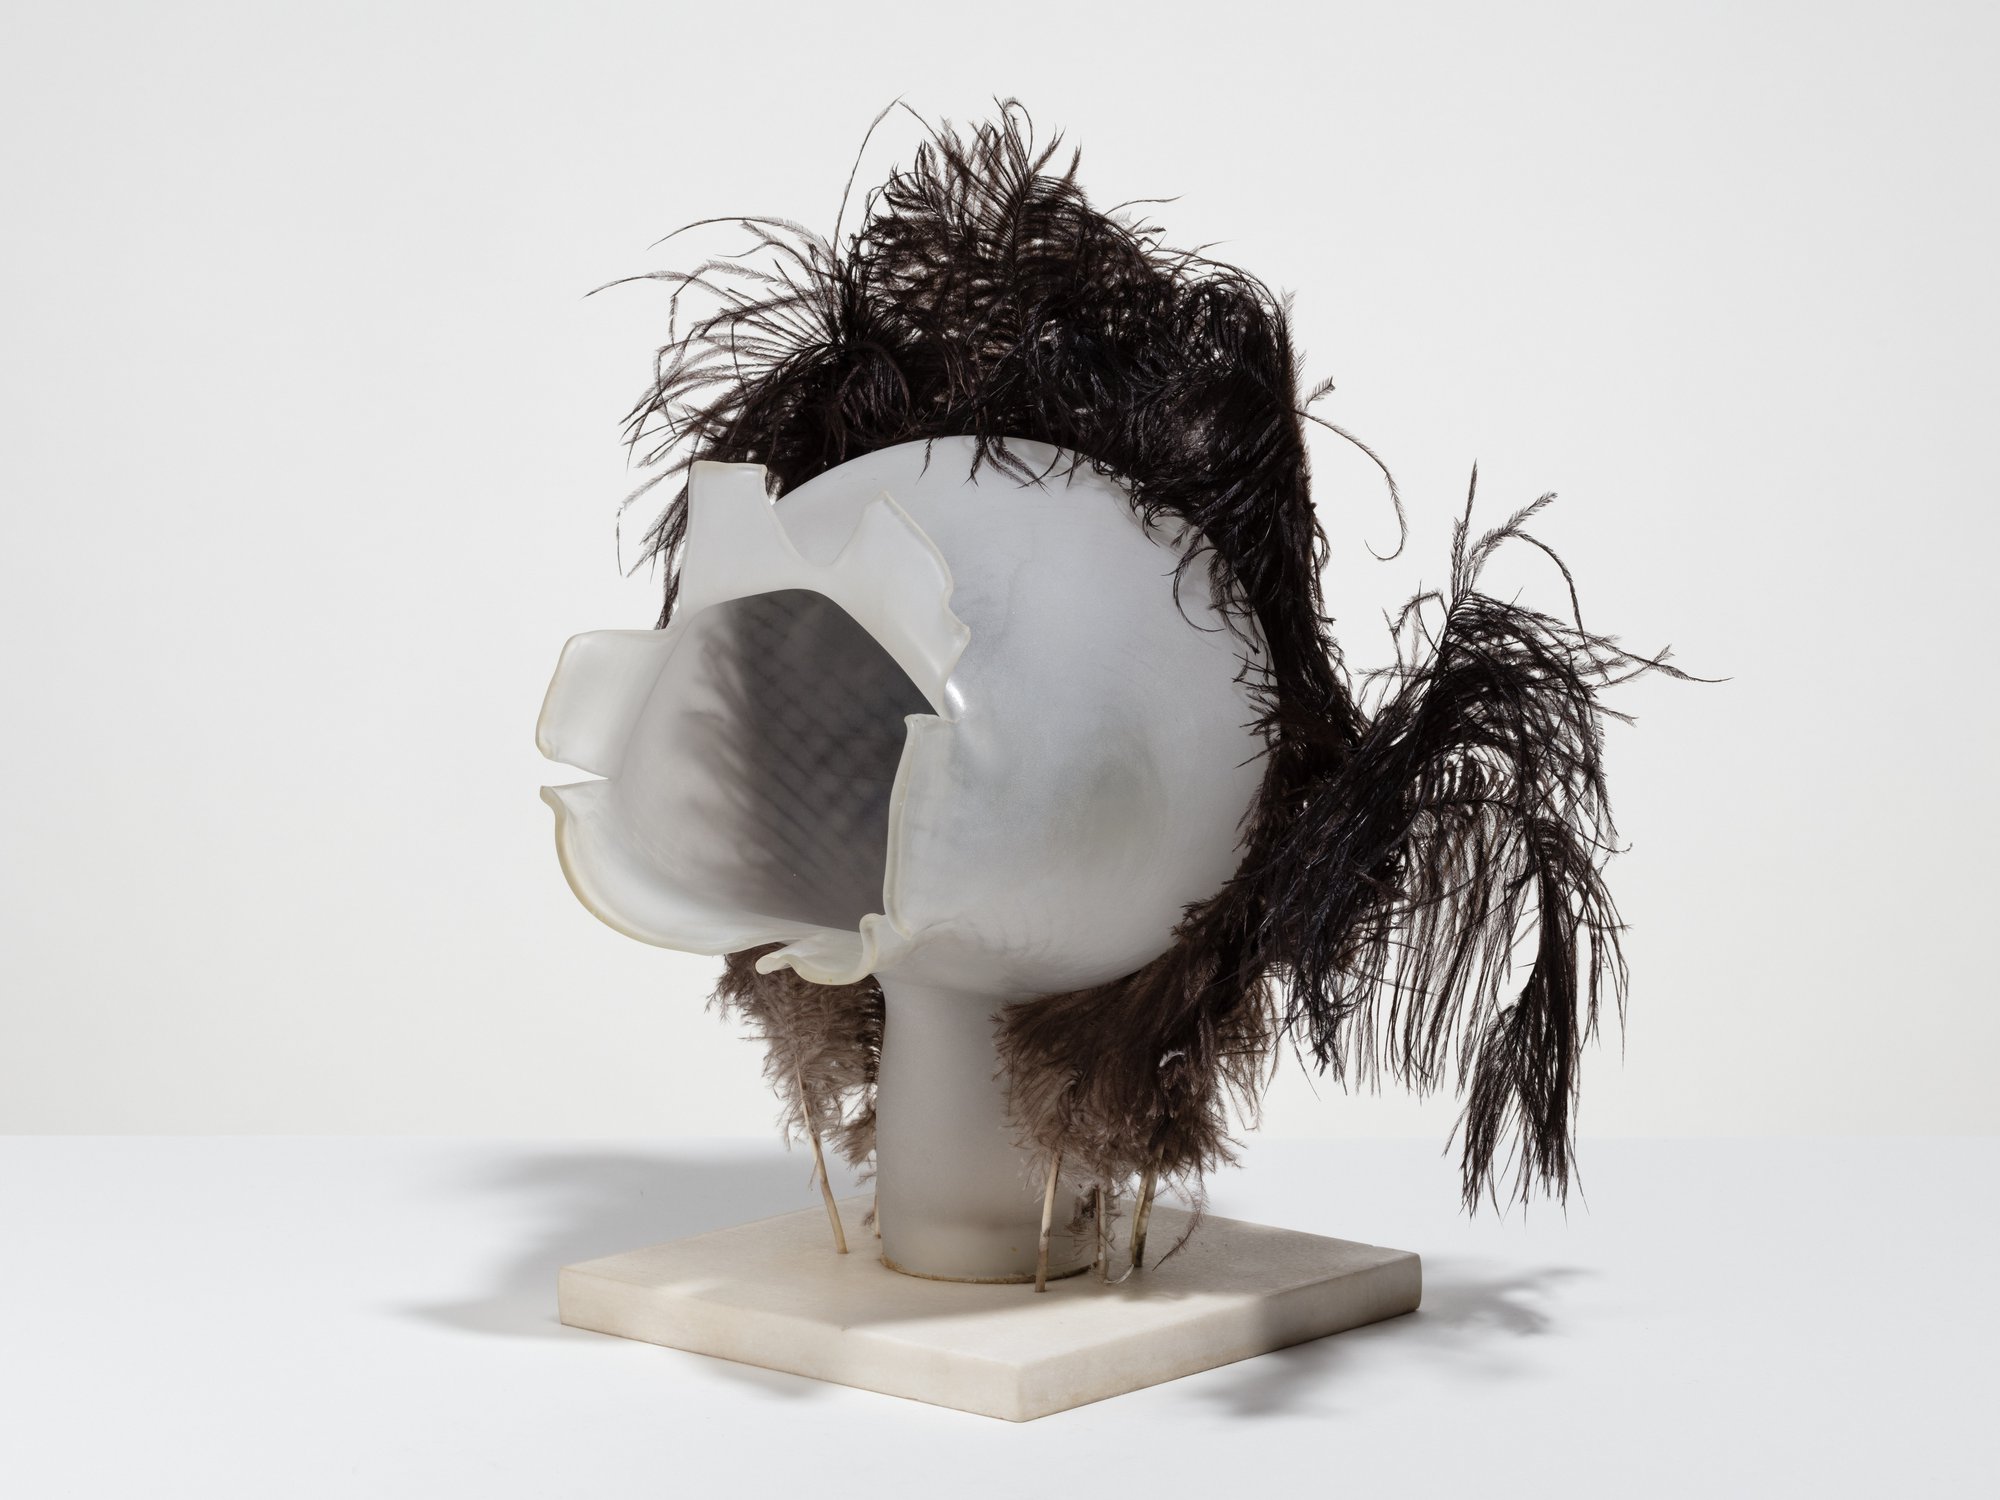 Liliane Lijn, Bridal Wound, sand blasted blown glass, ostrich feathers, white marble base, 38 x 35 x 27 cm (15 x 13 3/4 x 10 5/8 in), 1986 – 1990